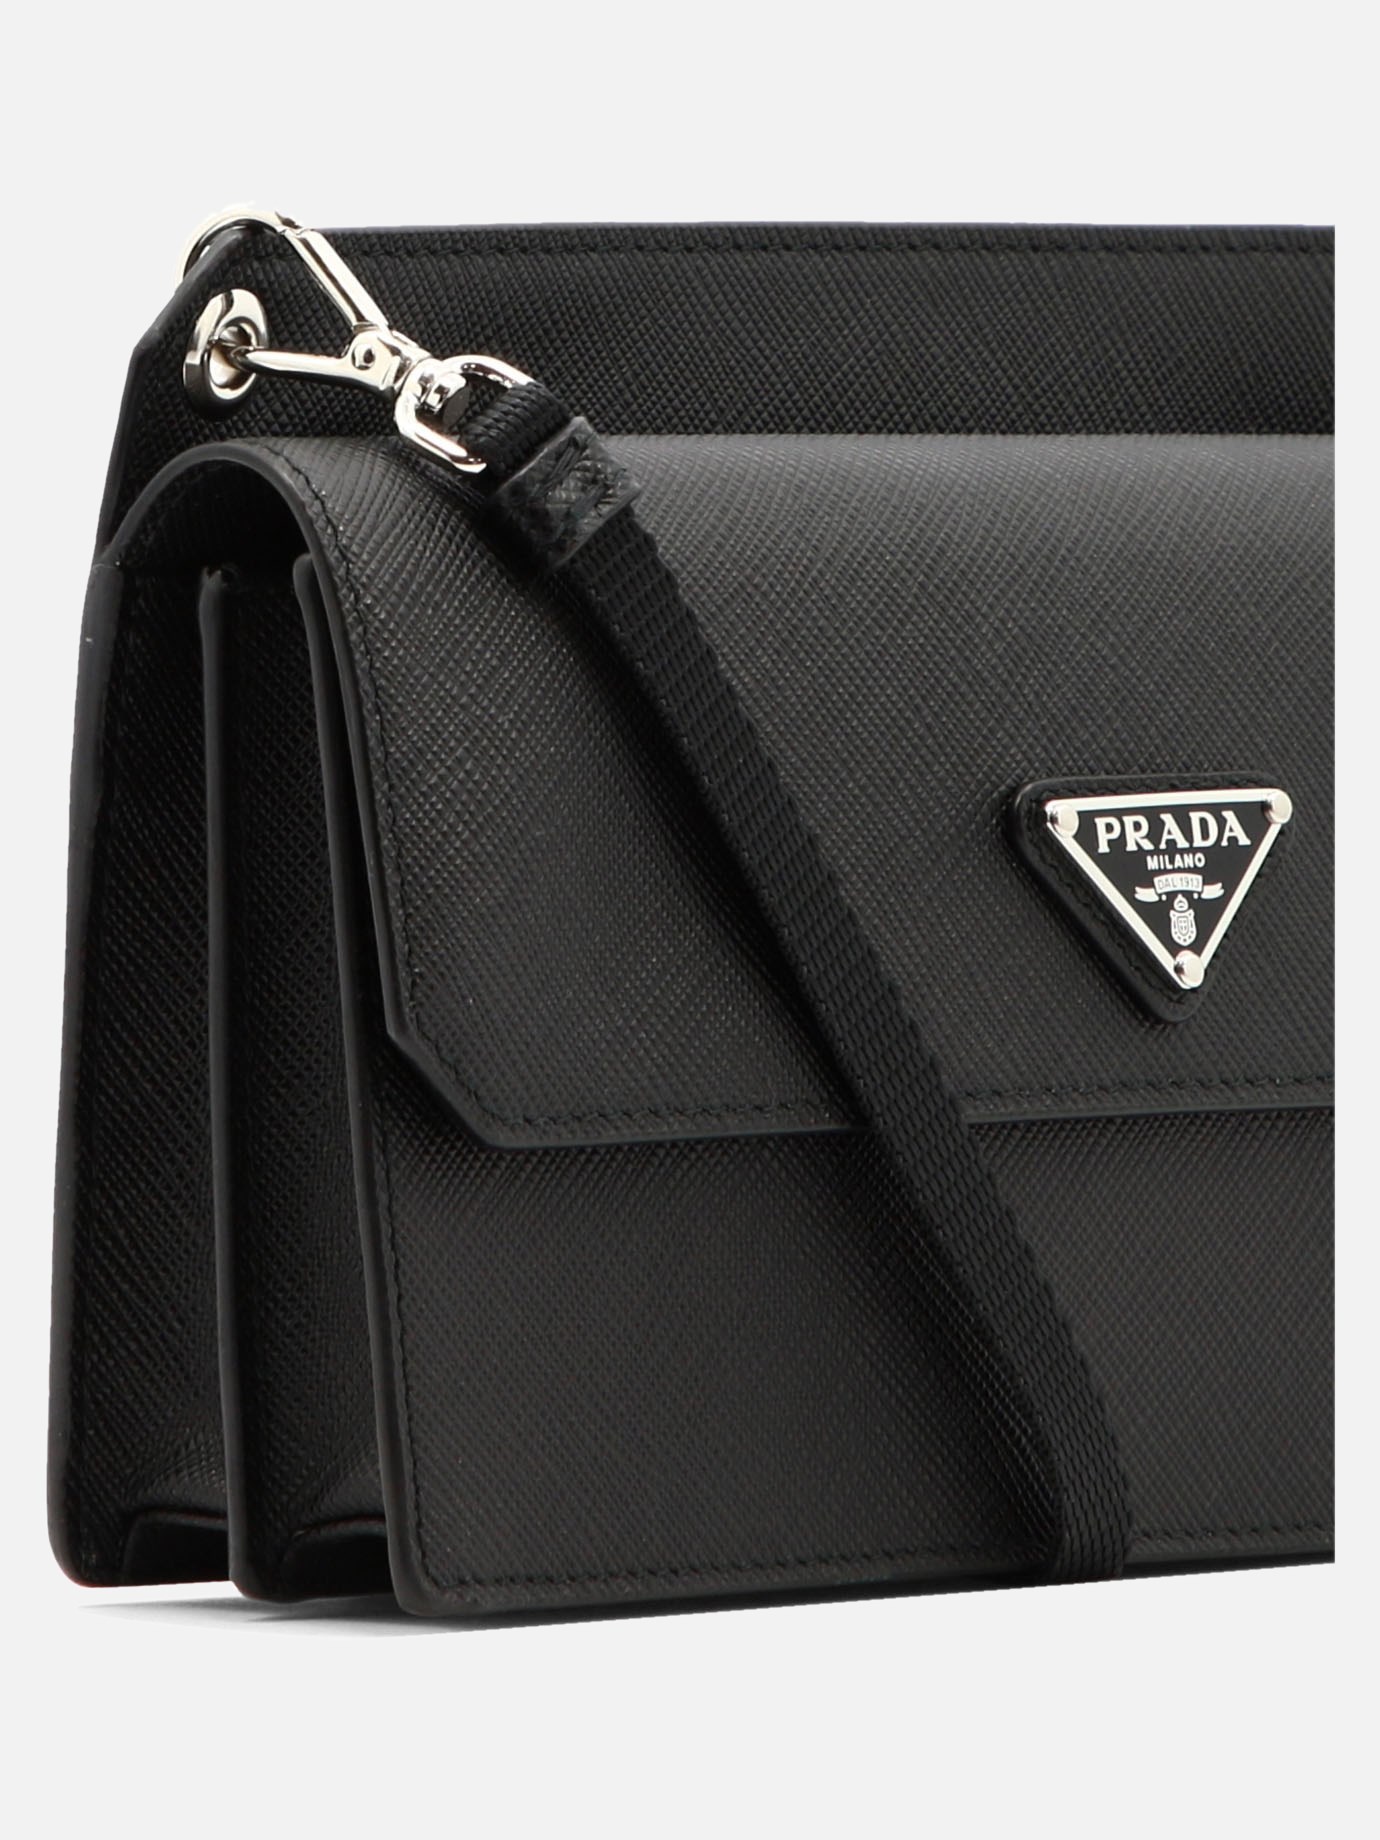 Saffiano leather smartphone case by Prada